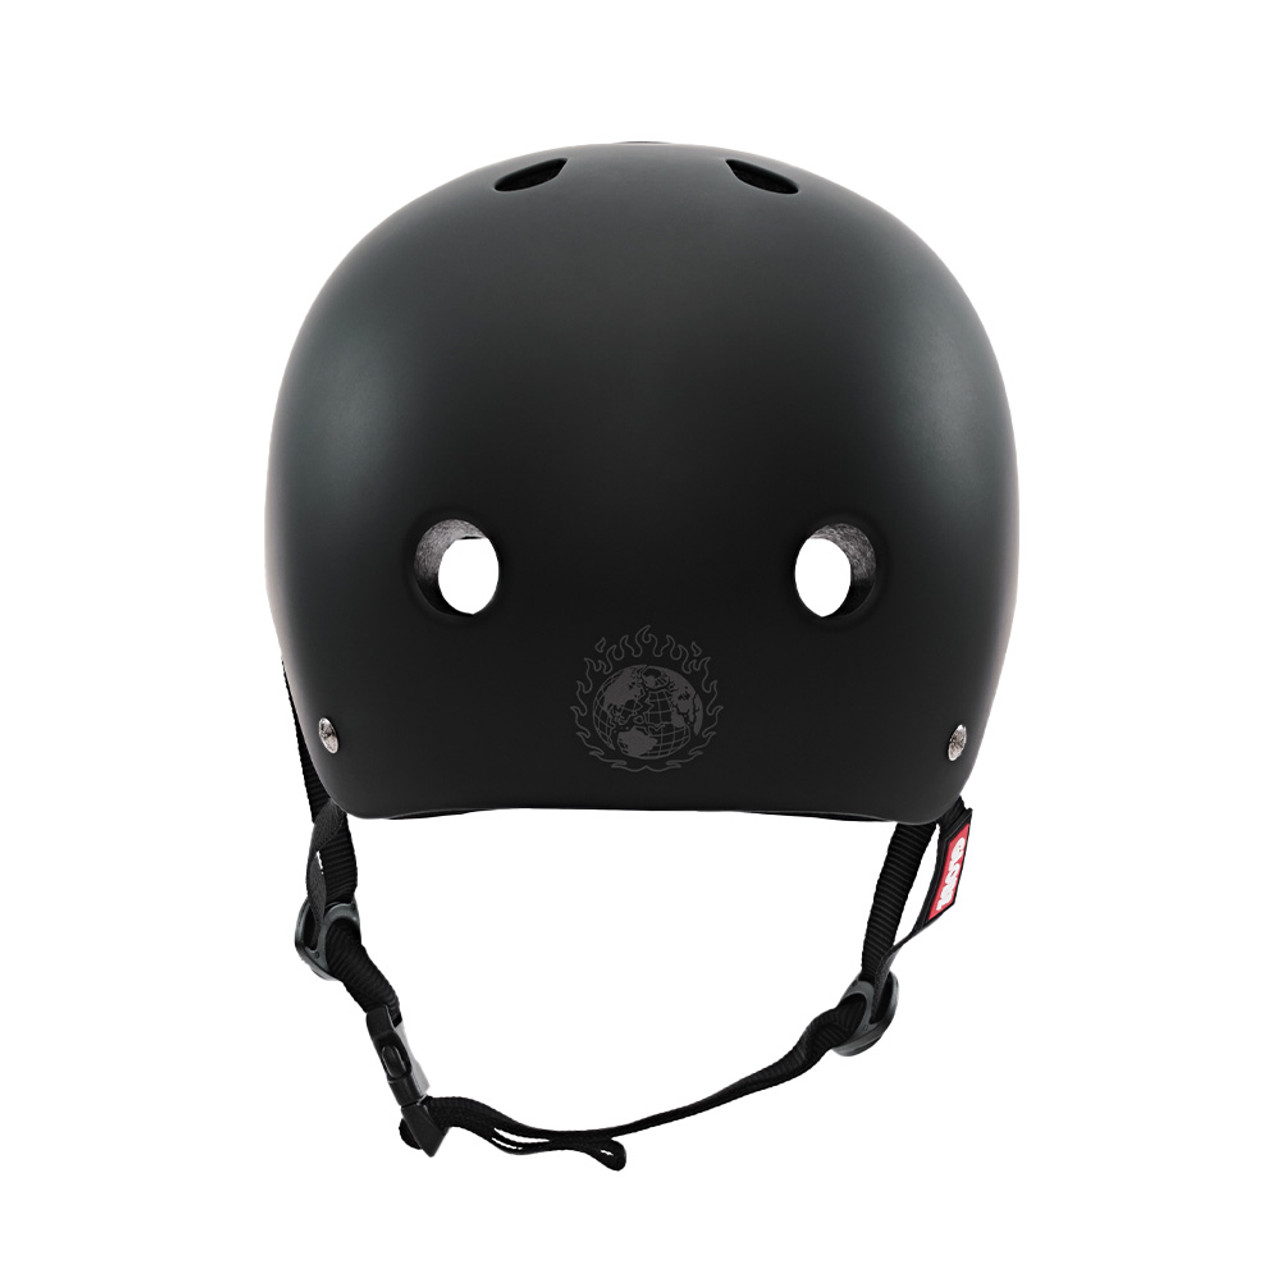 GLOBE Goodstock Certified Helmet Matte Black